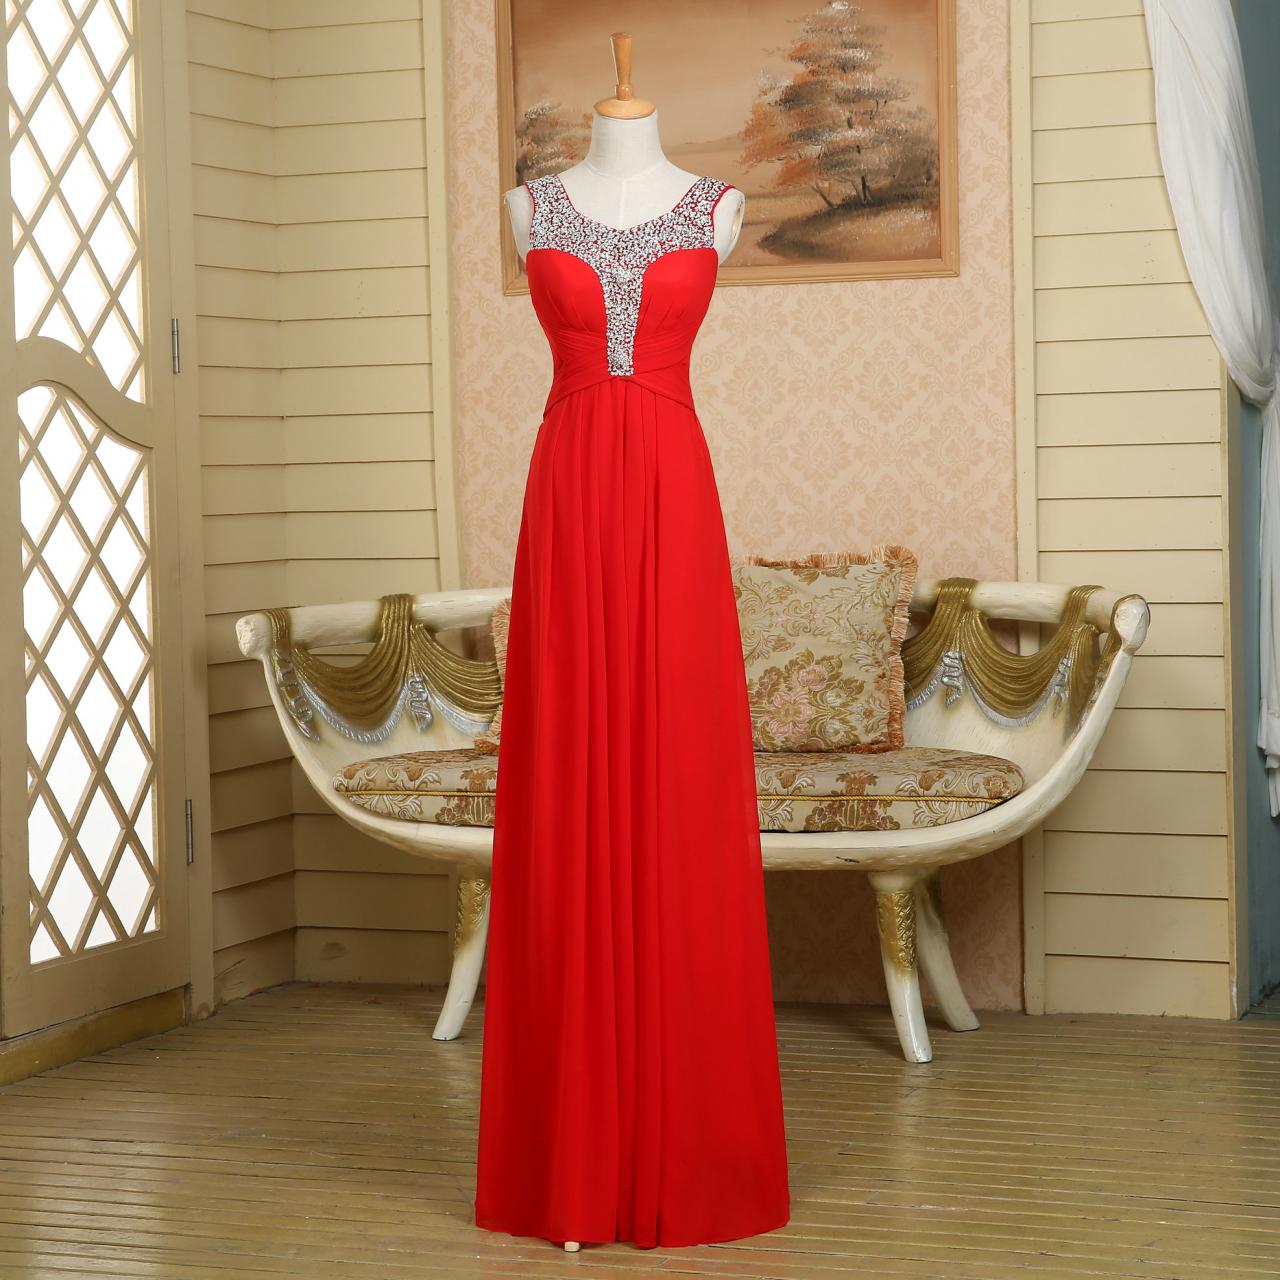 Elegant Beaded Straps Red Long Chiffon 80s Vintage Prom Dress,evening Dress,homecoming Dress,party Dress,bridesmaid Dress Wedding,club,cocktail